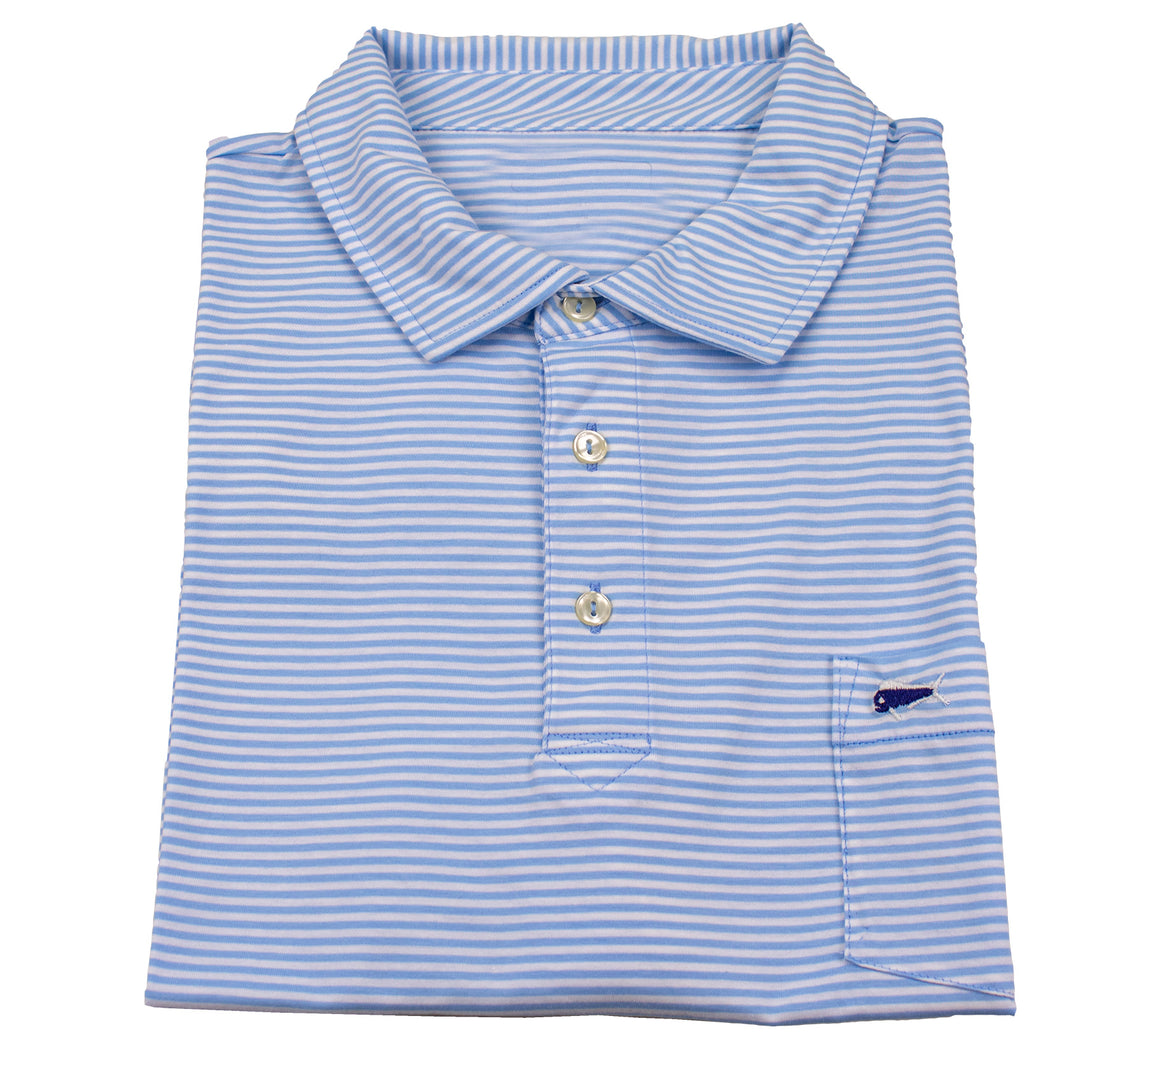 Men's Short Sleeve Sport Polo - Stripe - Sky Blue